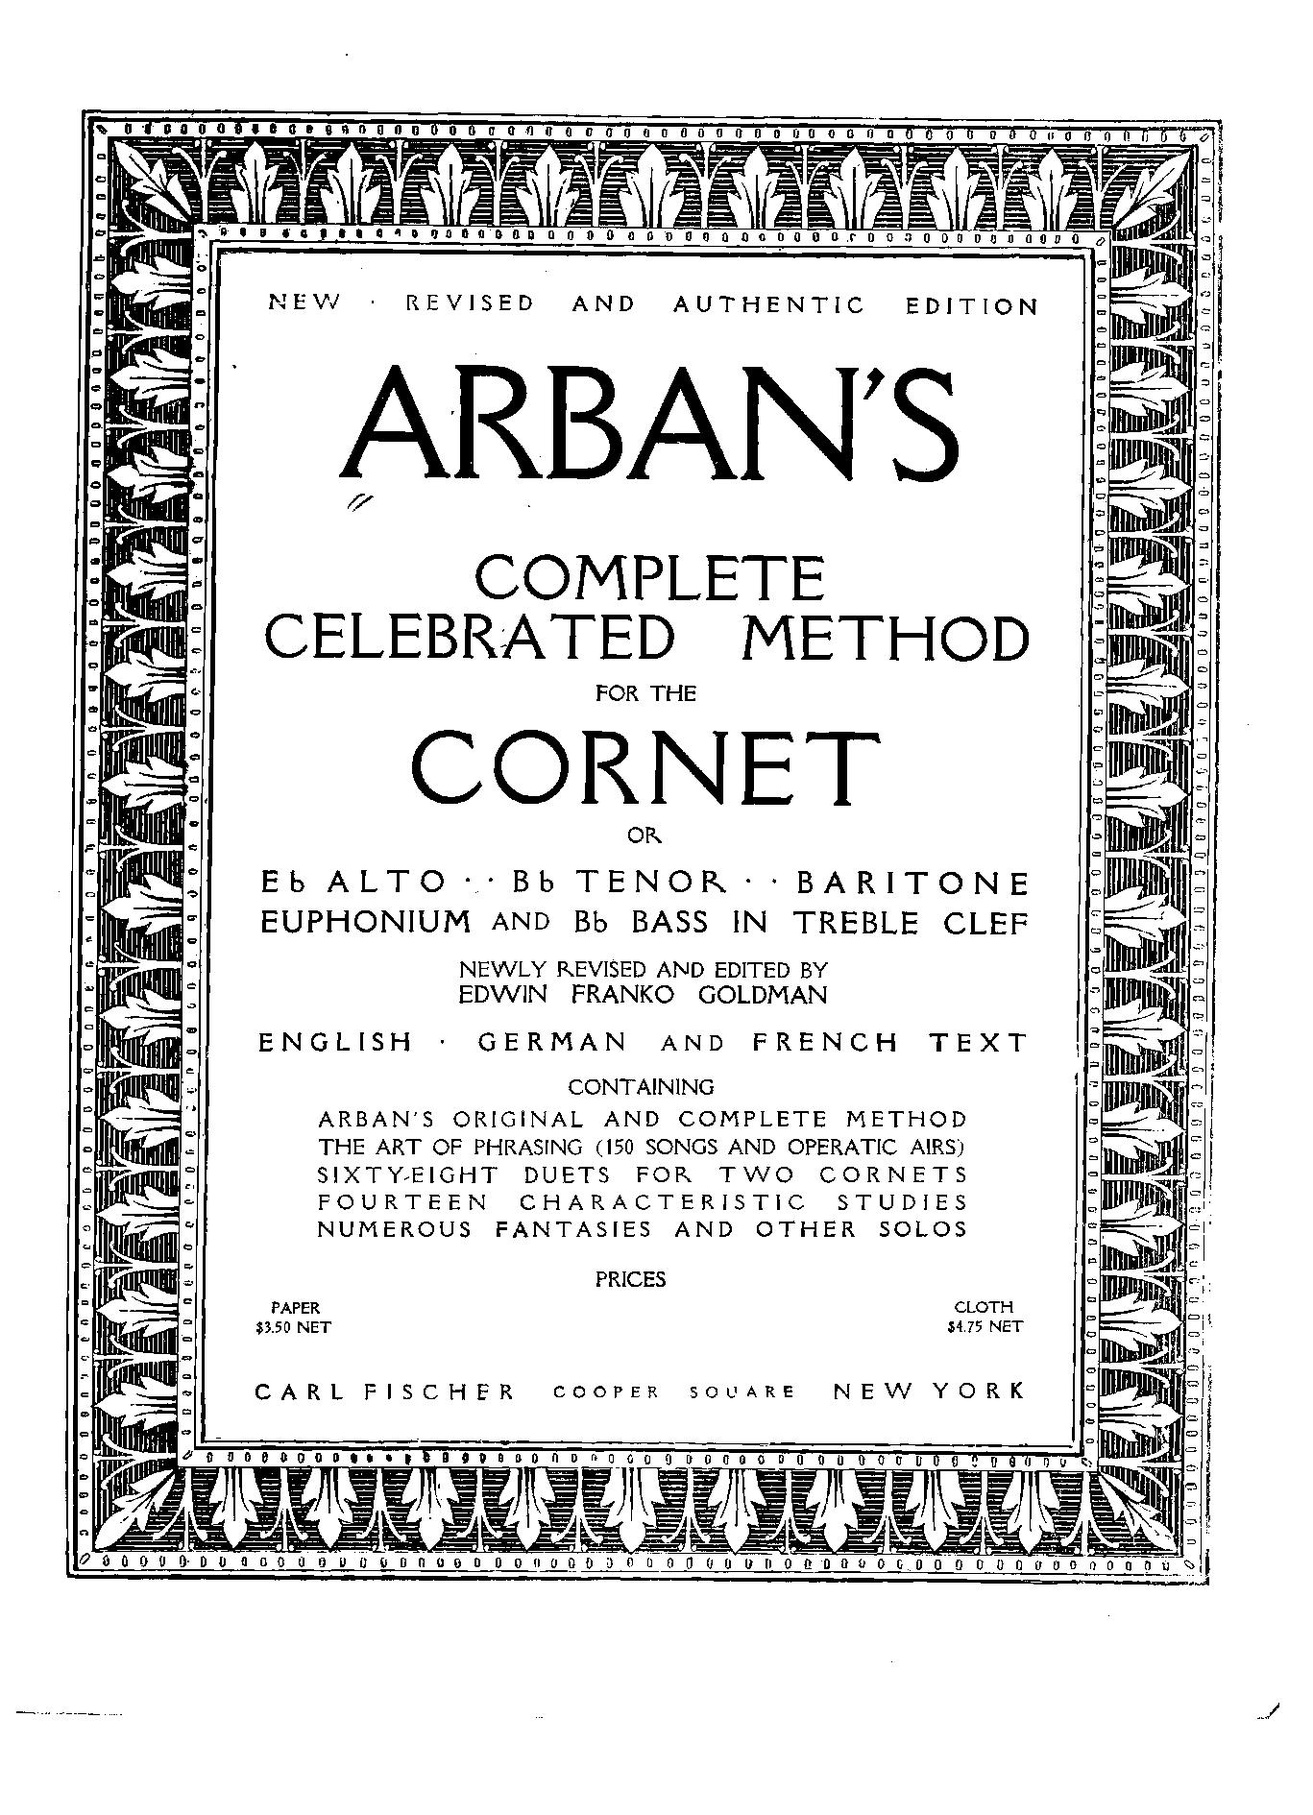 Arban complete conservatory method